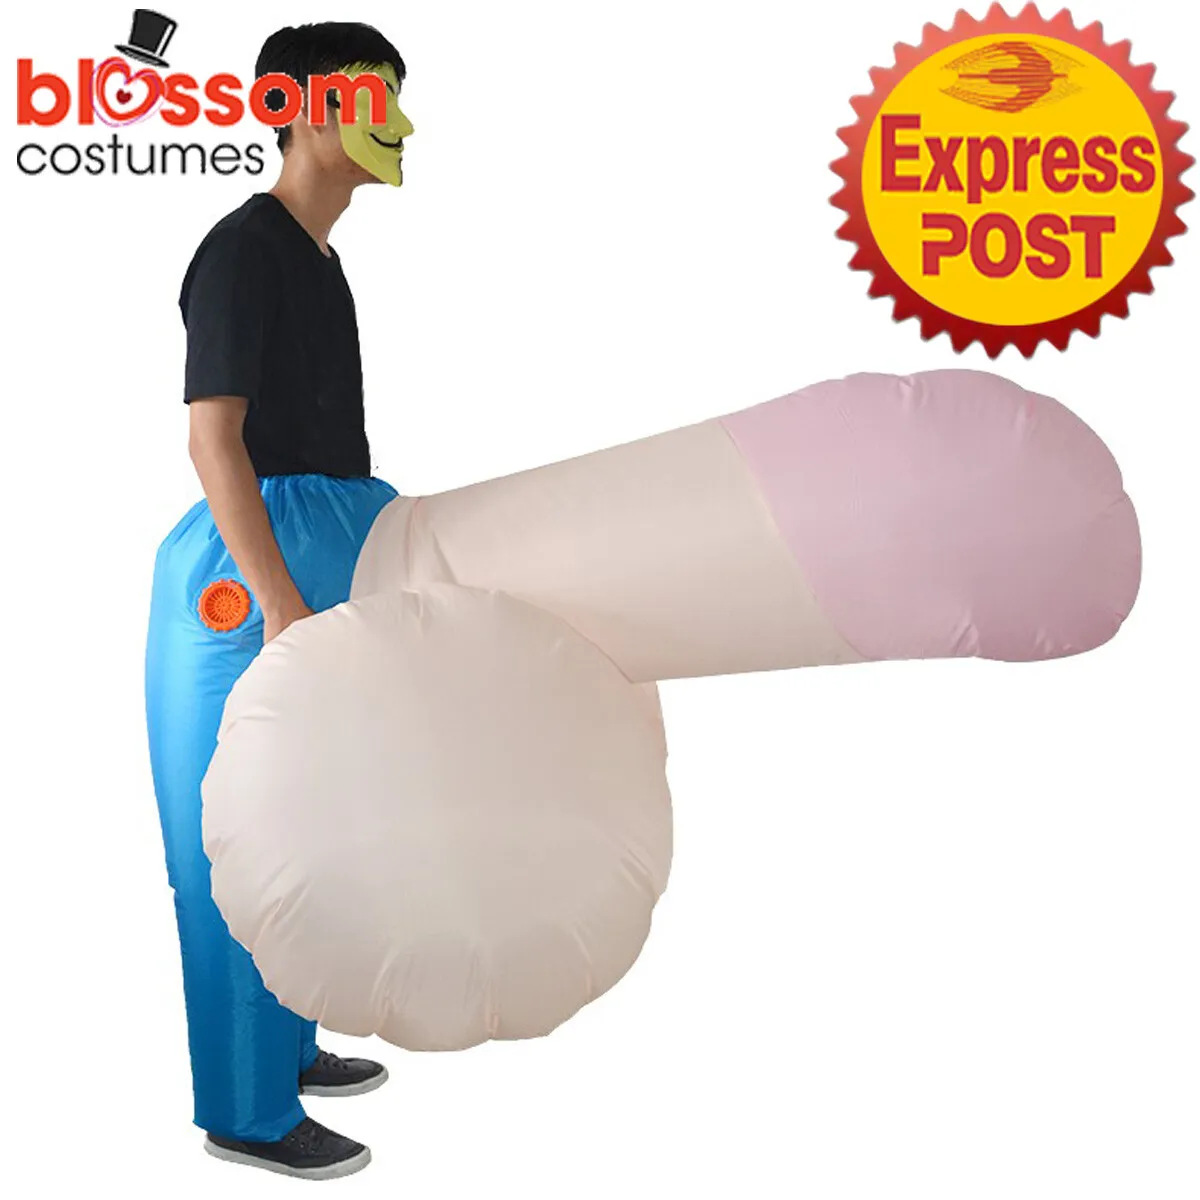 chris murt recommends Giant Penis Halloween Costume